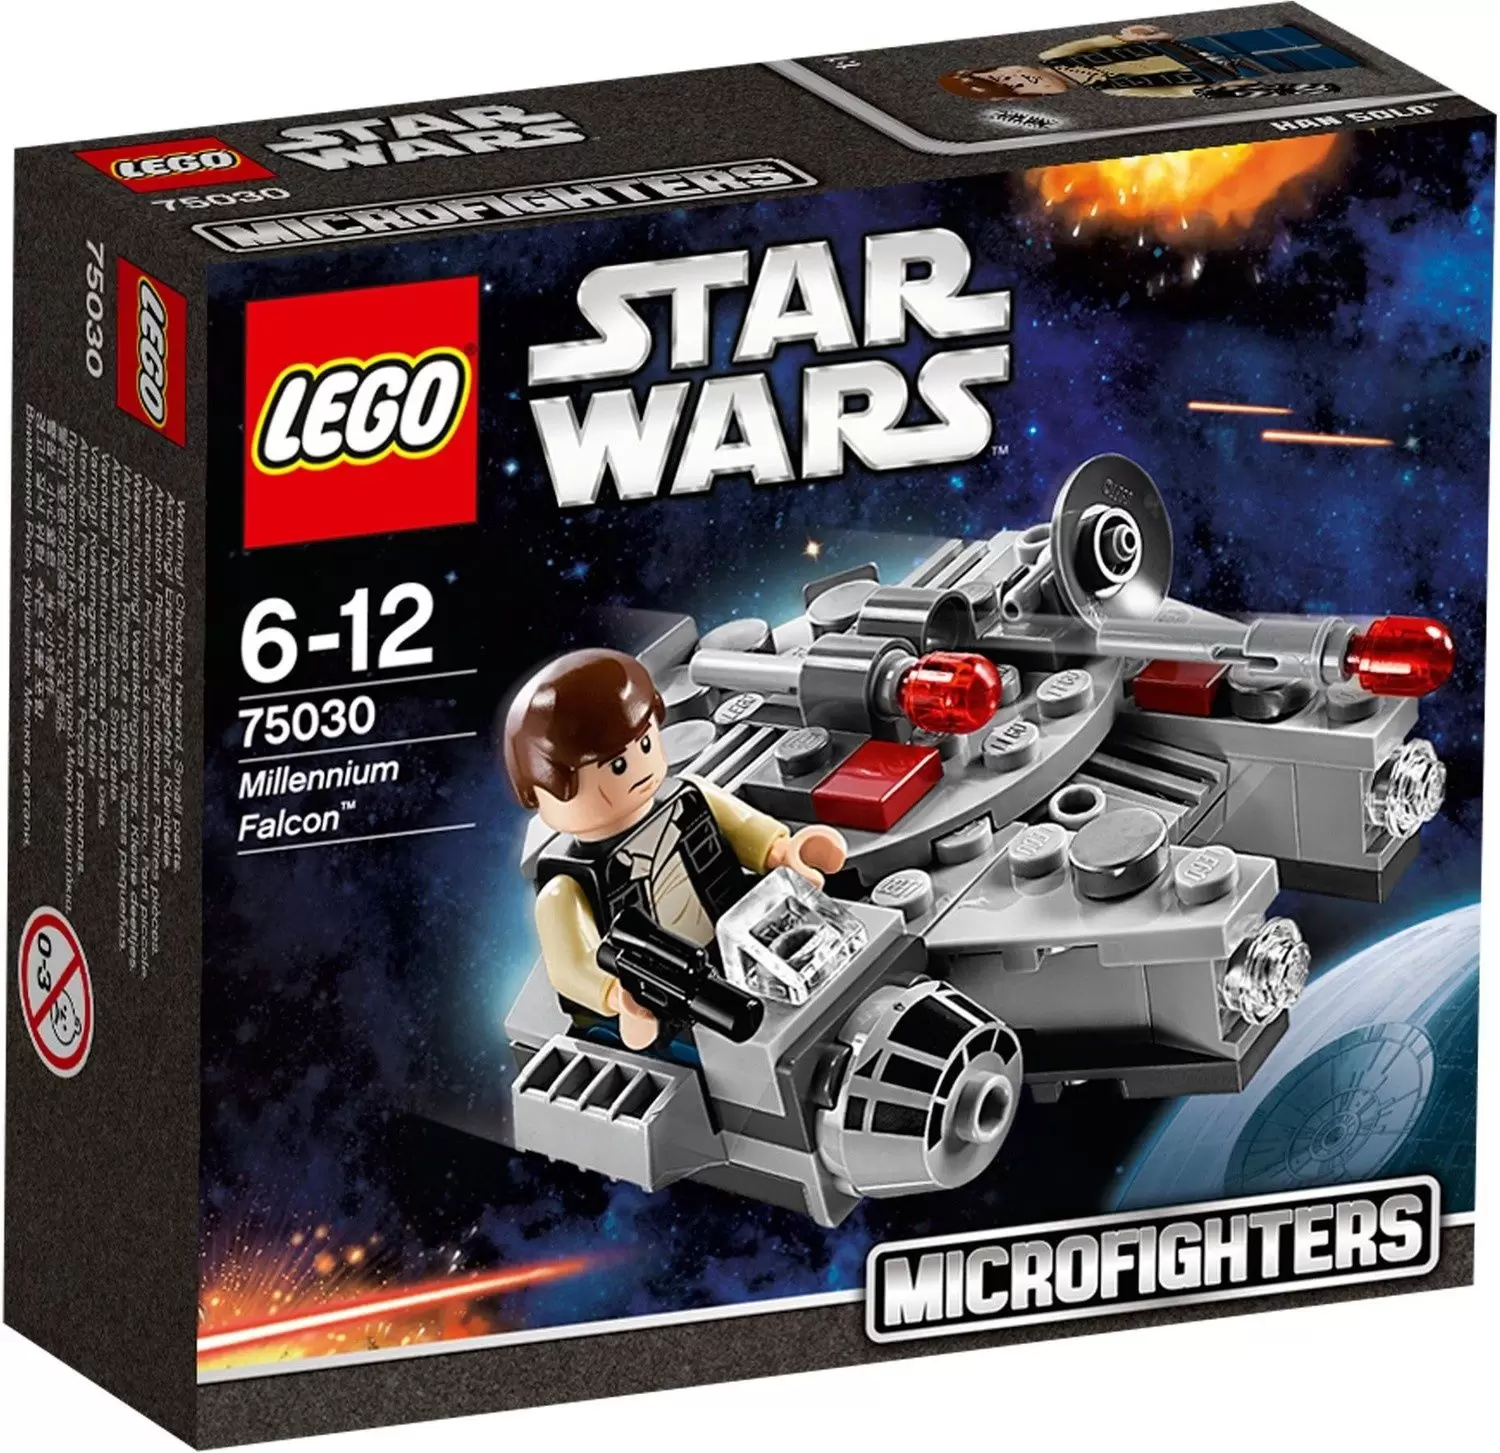 LEGO Star Wars - Millennium Falcon (Microfighters)